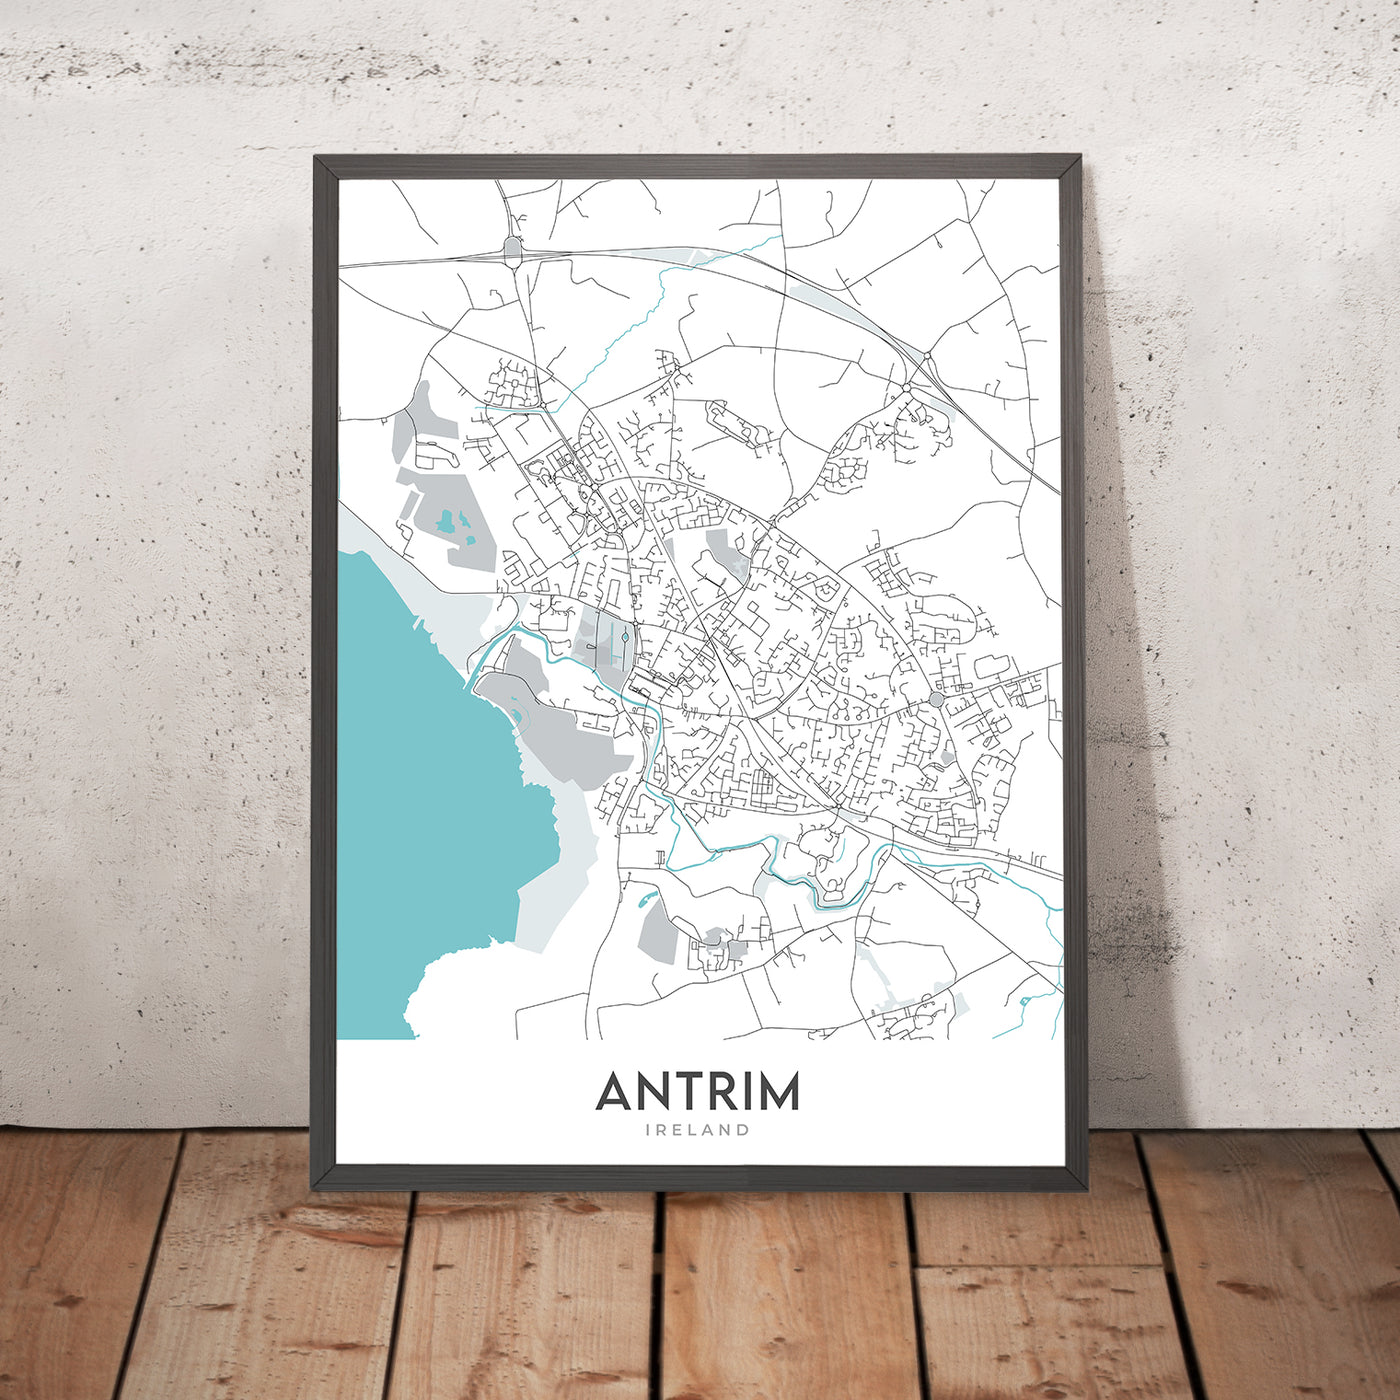 Modern Town Map of Antrim, Northern Ireland: Castle Gardens, Round Tower, Dublin Rd, Lough Neagh, A26